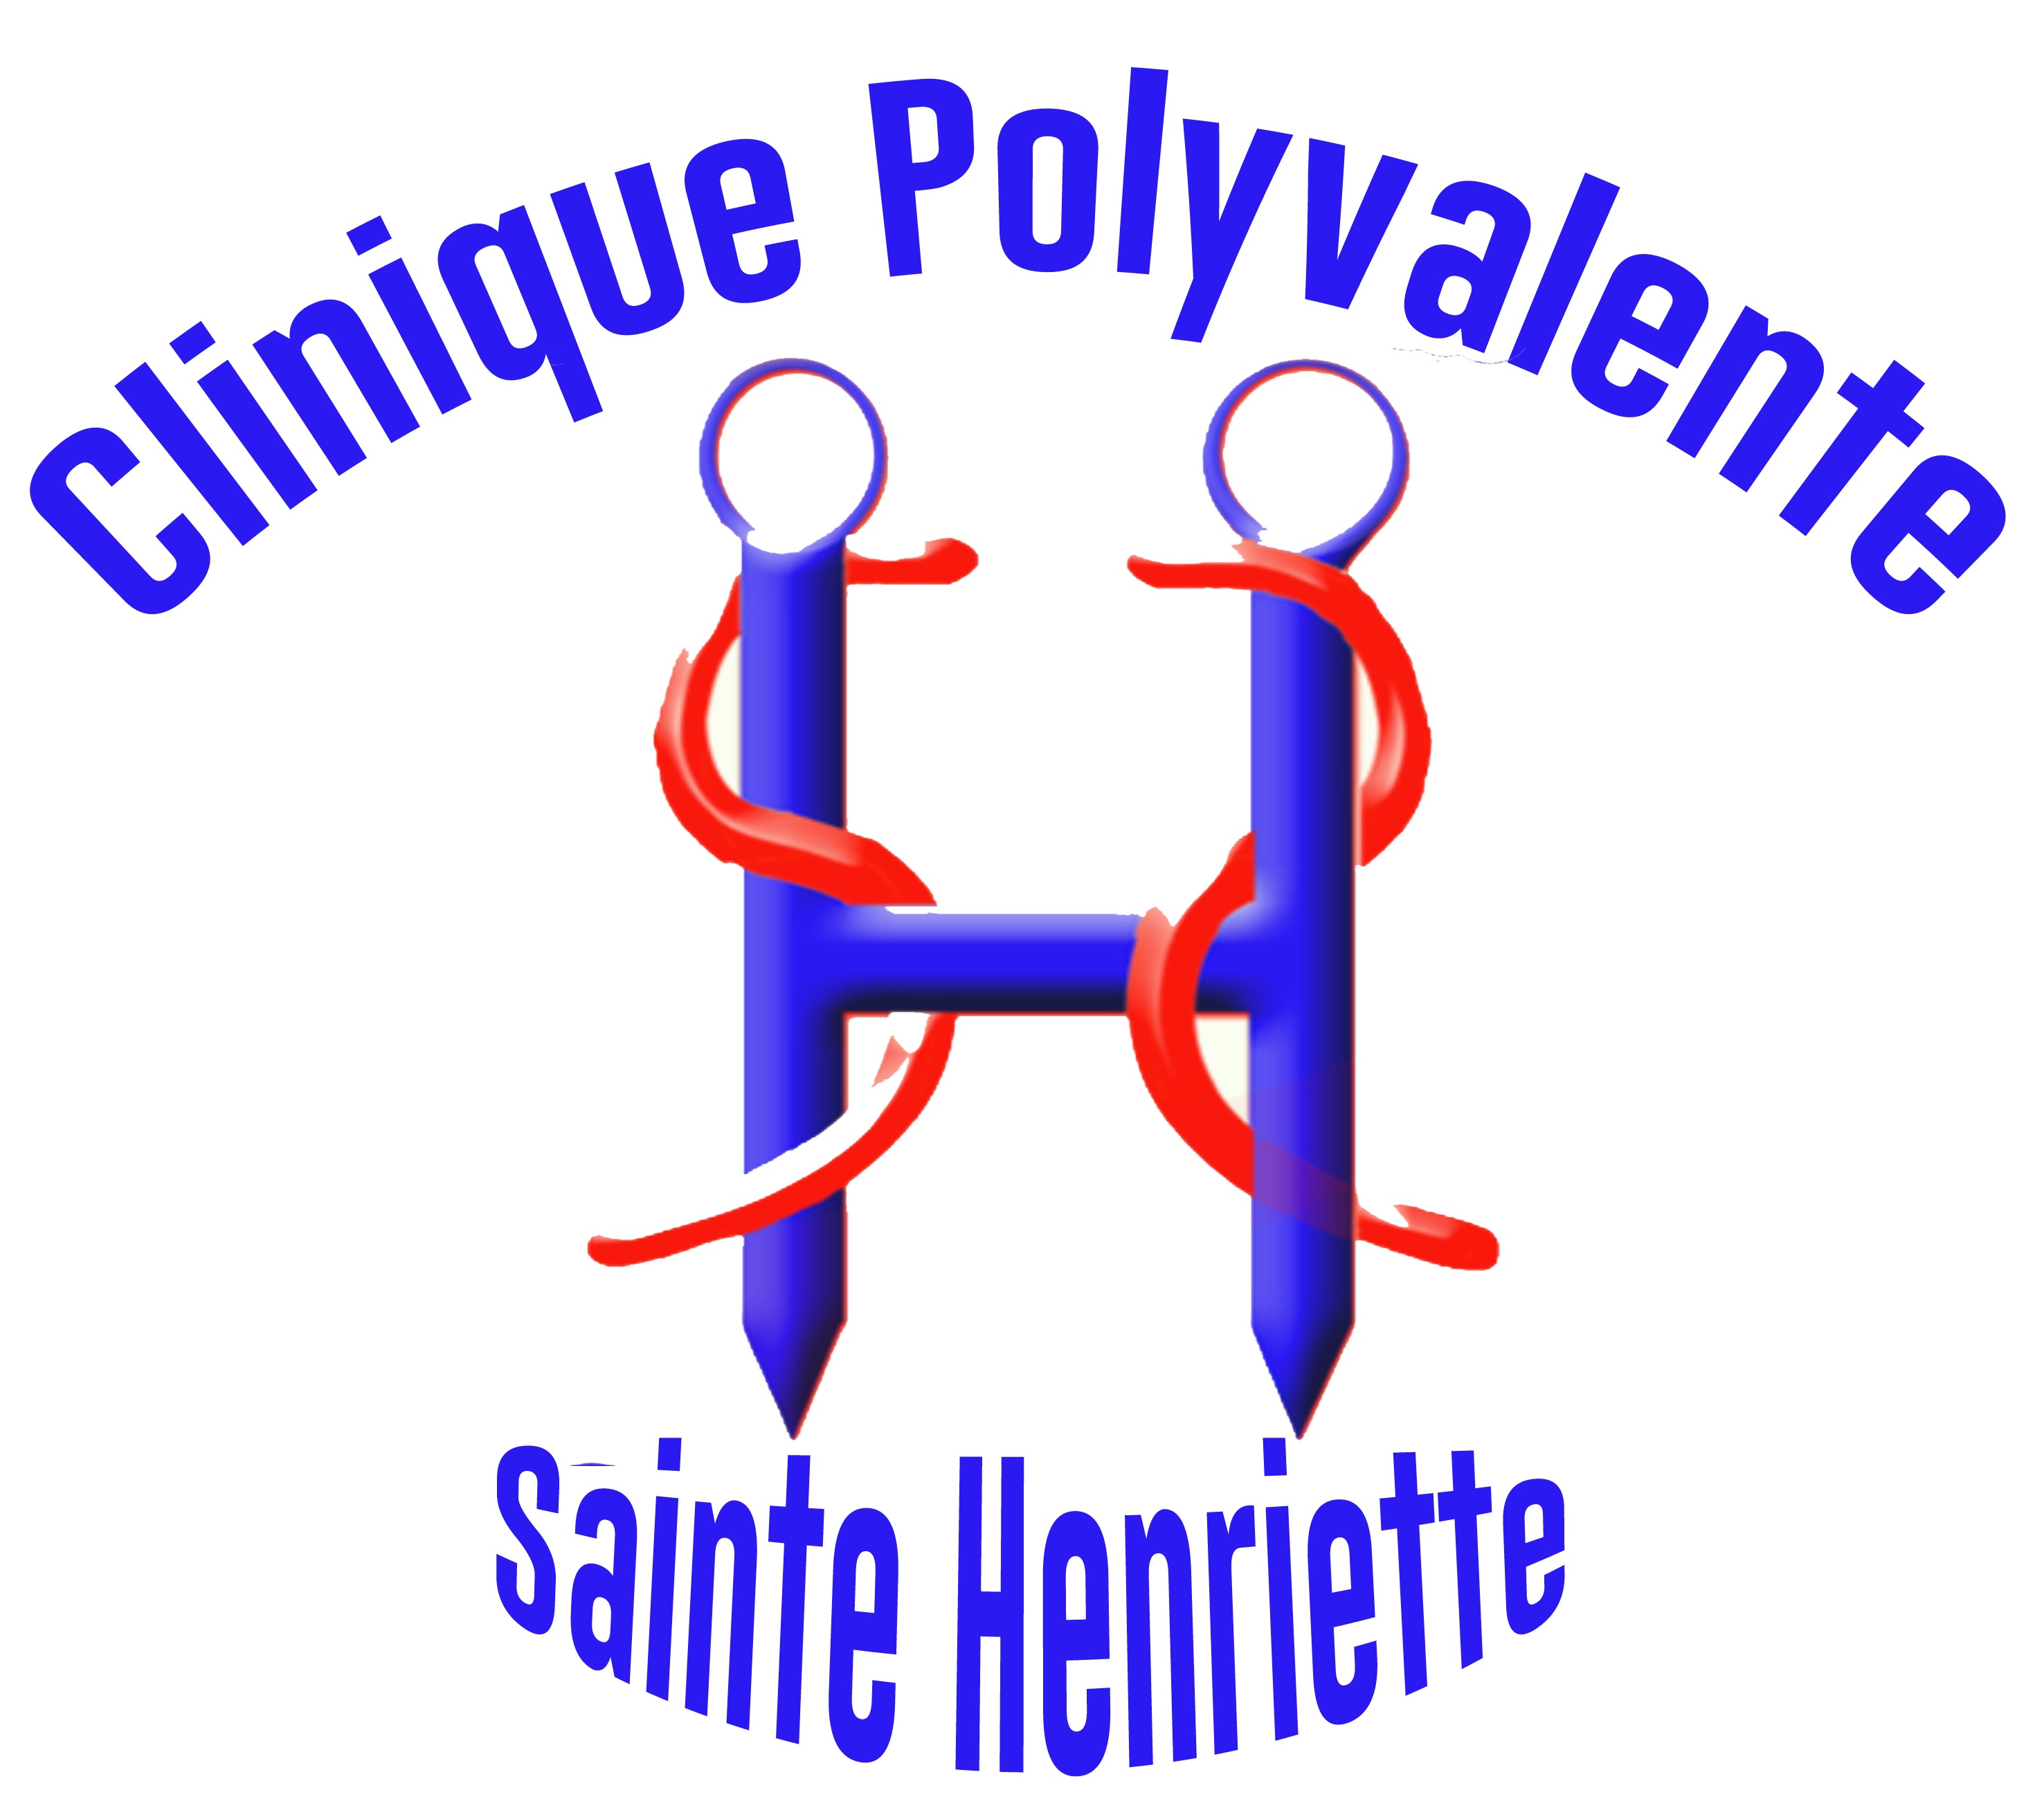 logo de reference